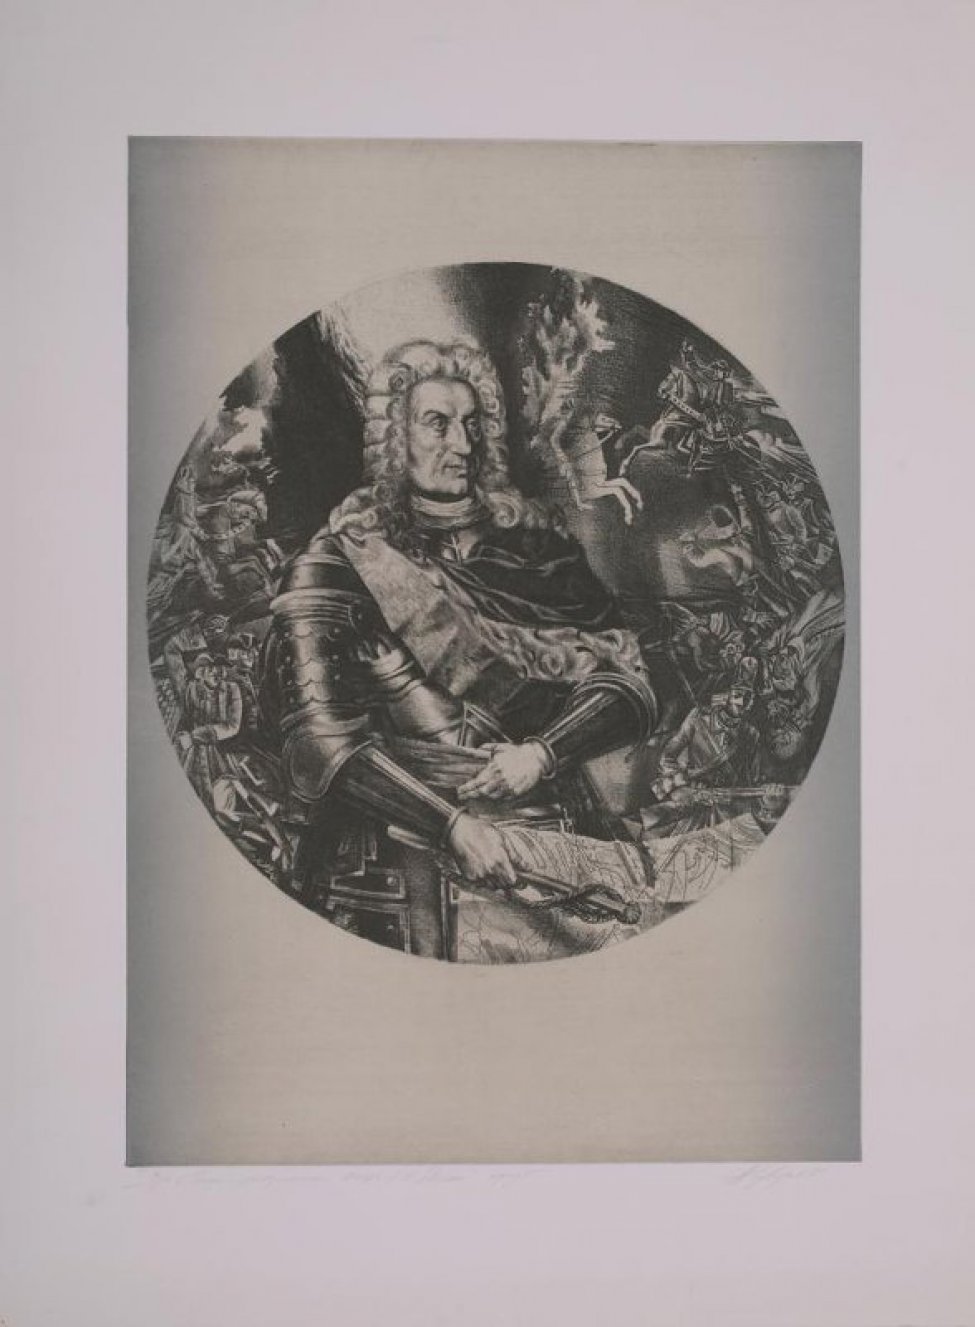 В круге, на фоне битвы, изображен мужчина в парике и рыцарских доспехах. Взгляд его устремлен вправо. Перед ним - карта.